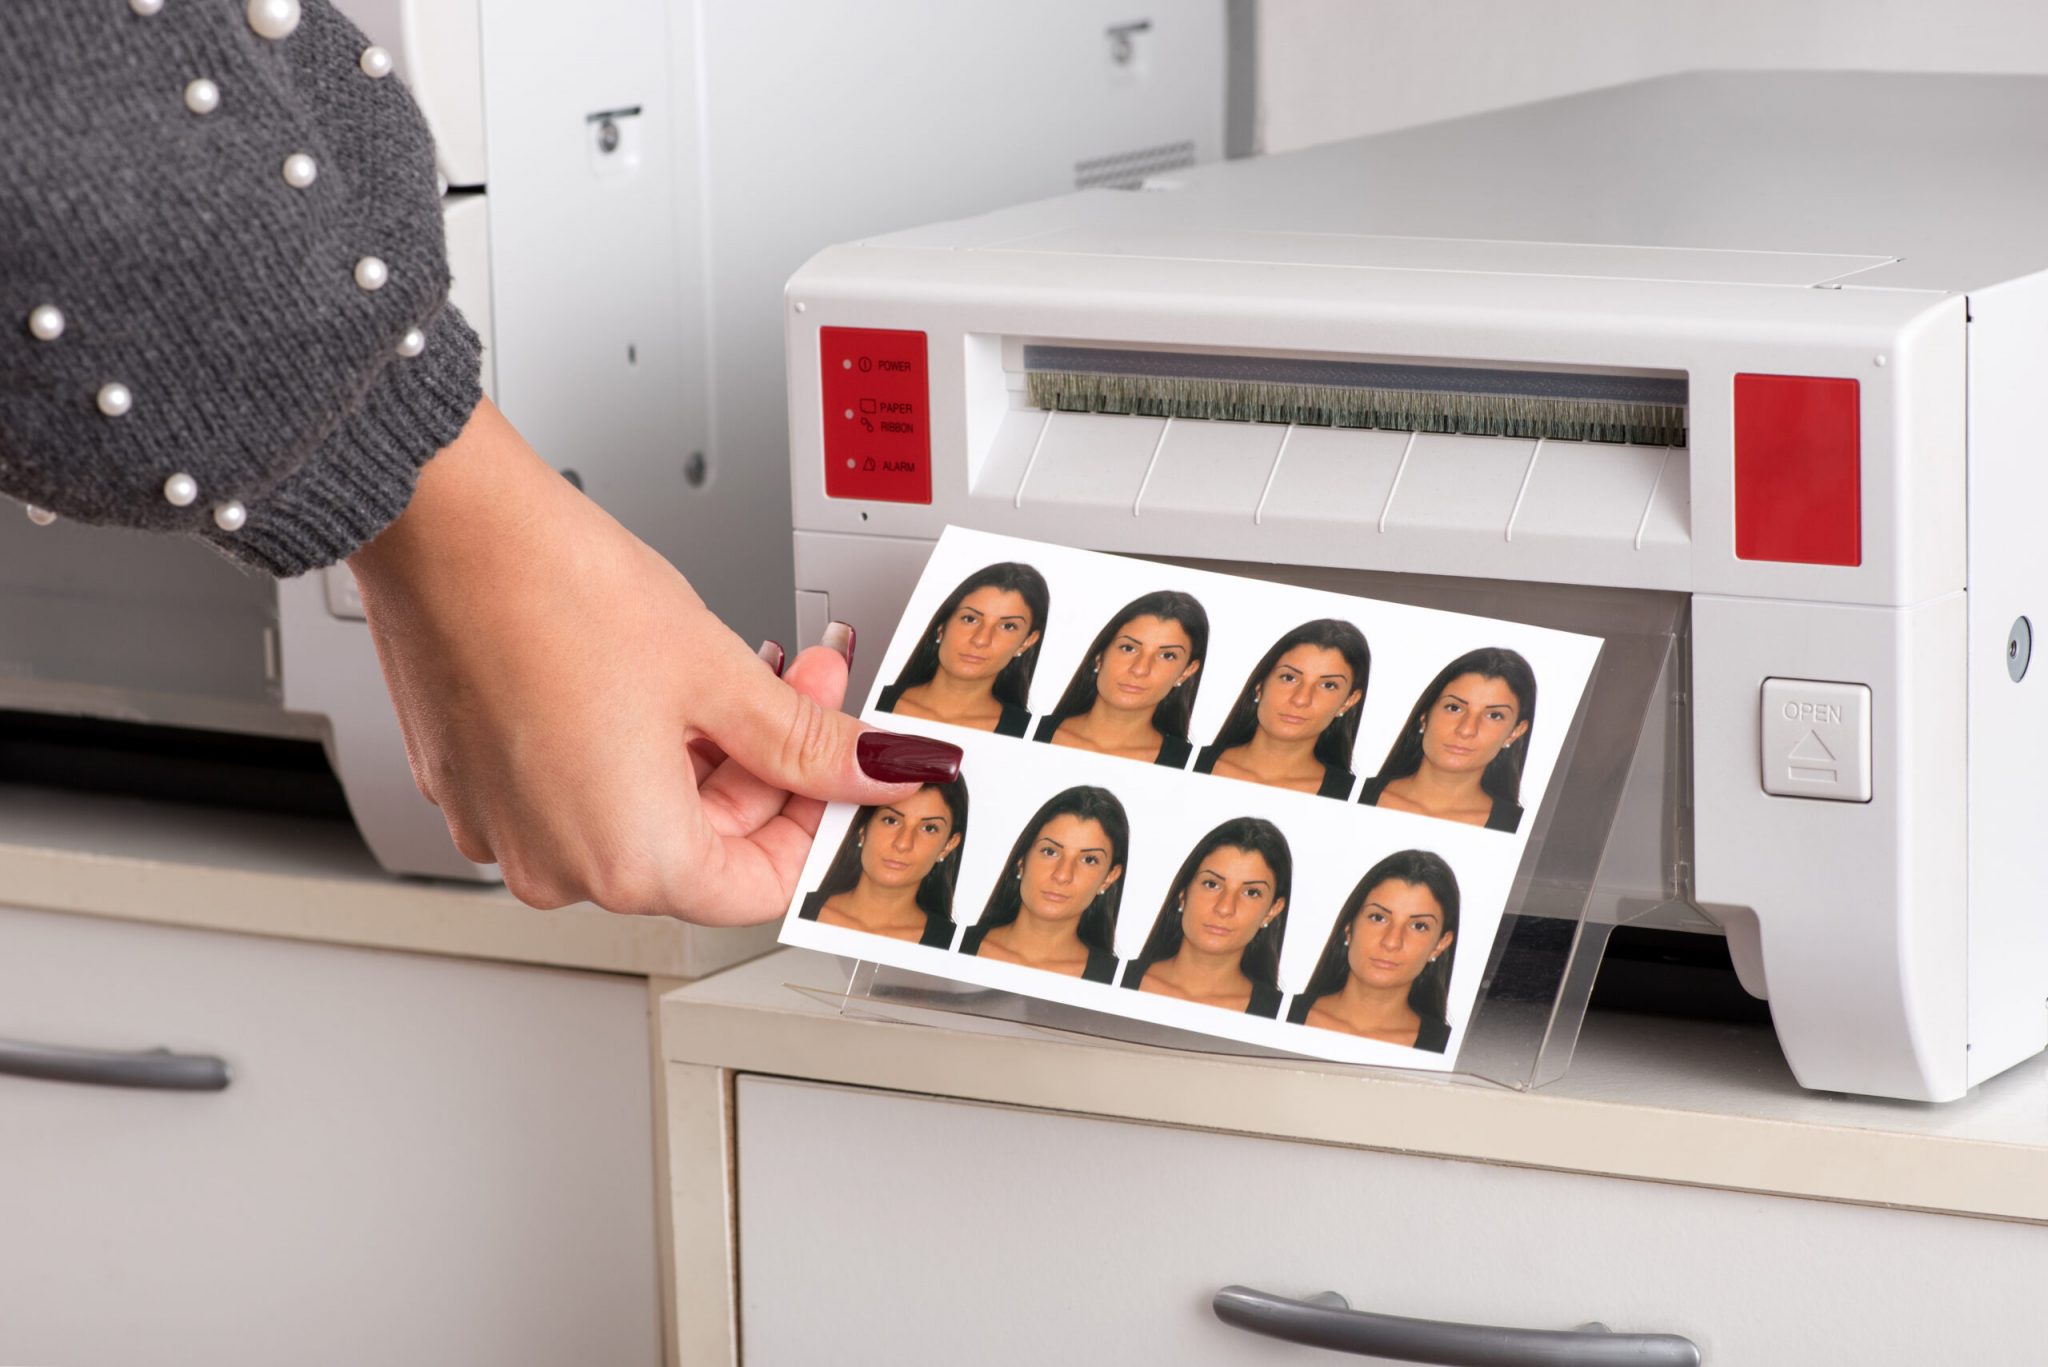 Can you print passport photos at home?